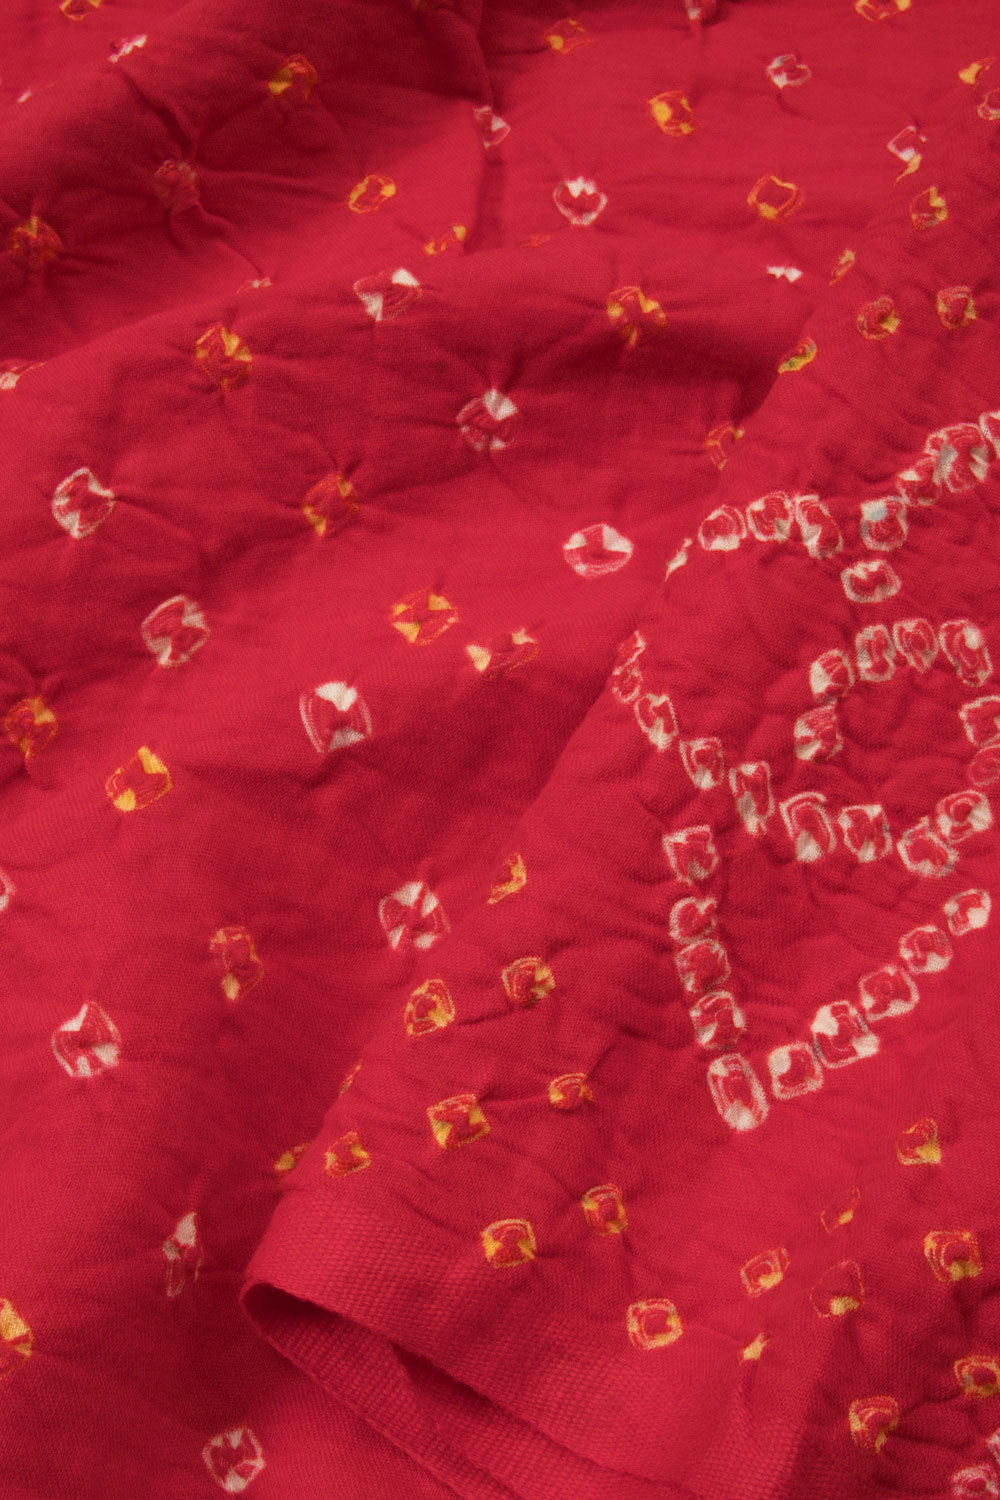 Ruby Red Handcrafted Bandhani Cotton Saree - Avishya